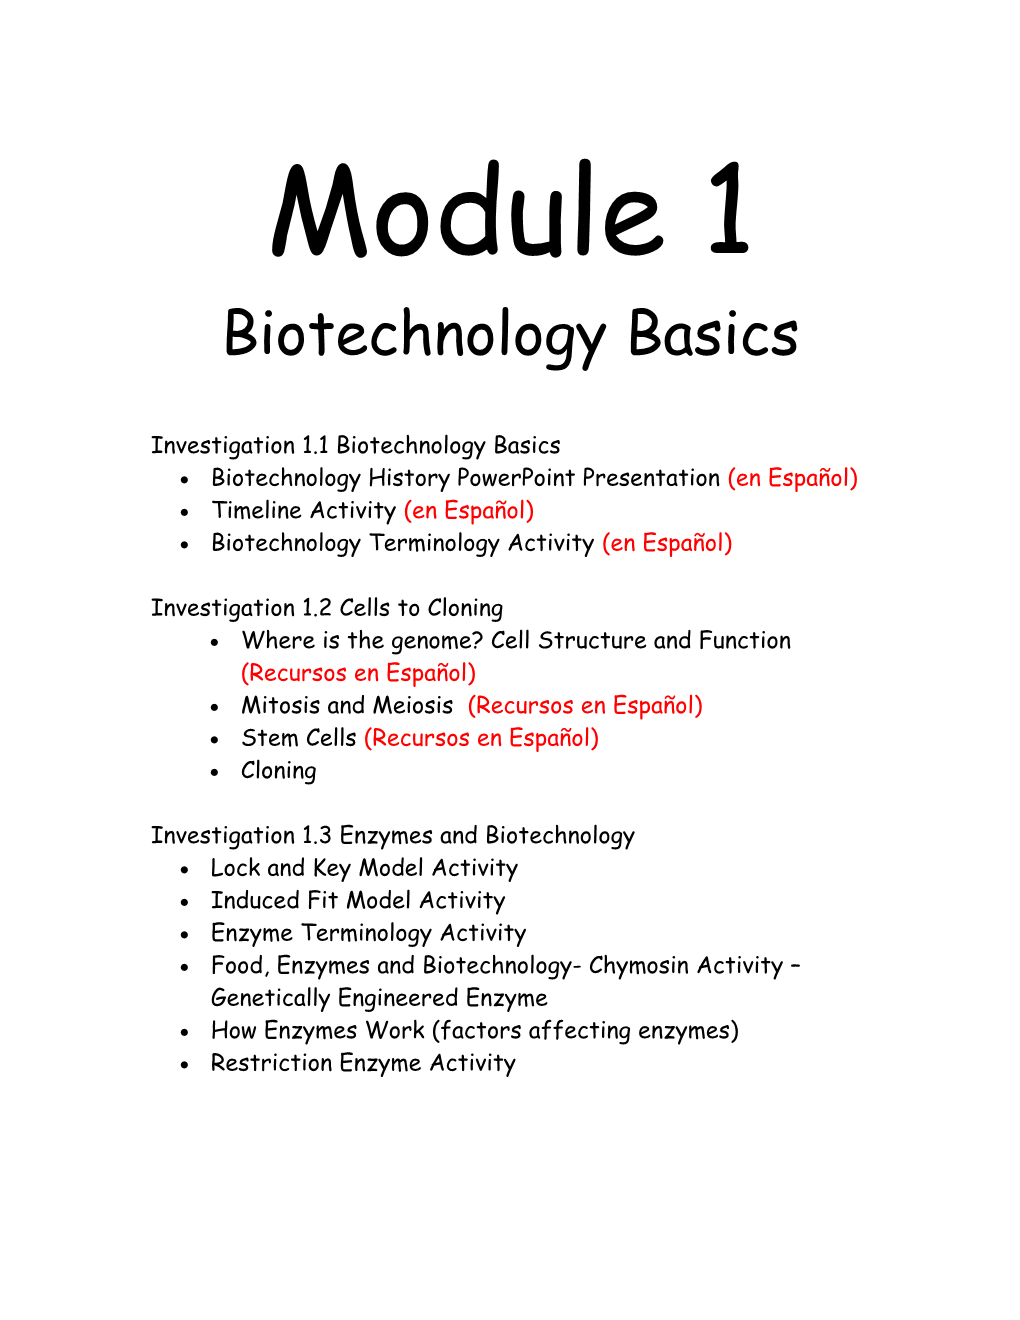 Biotechnology Basics